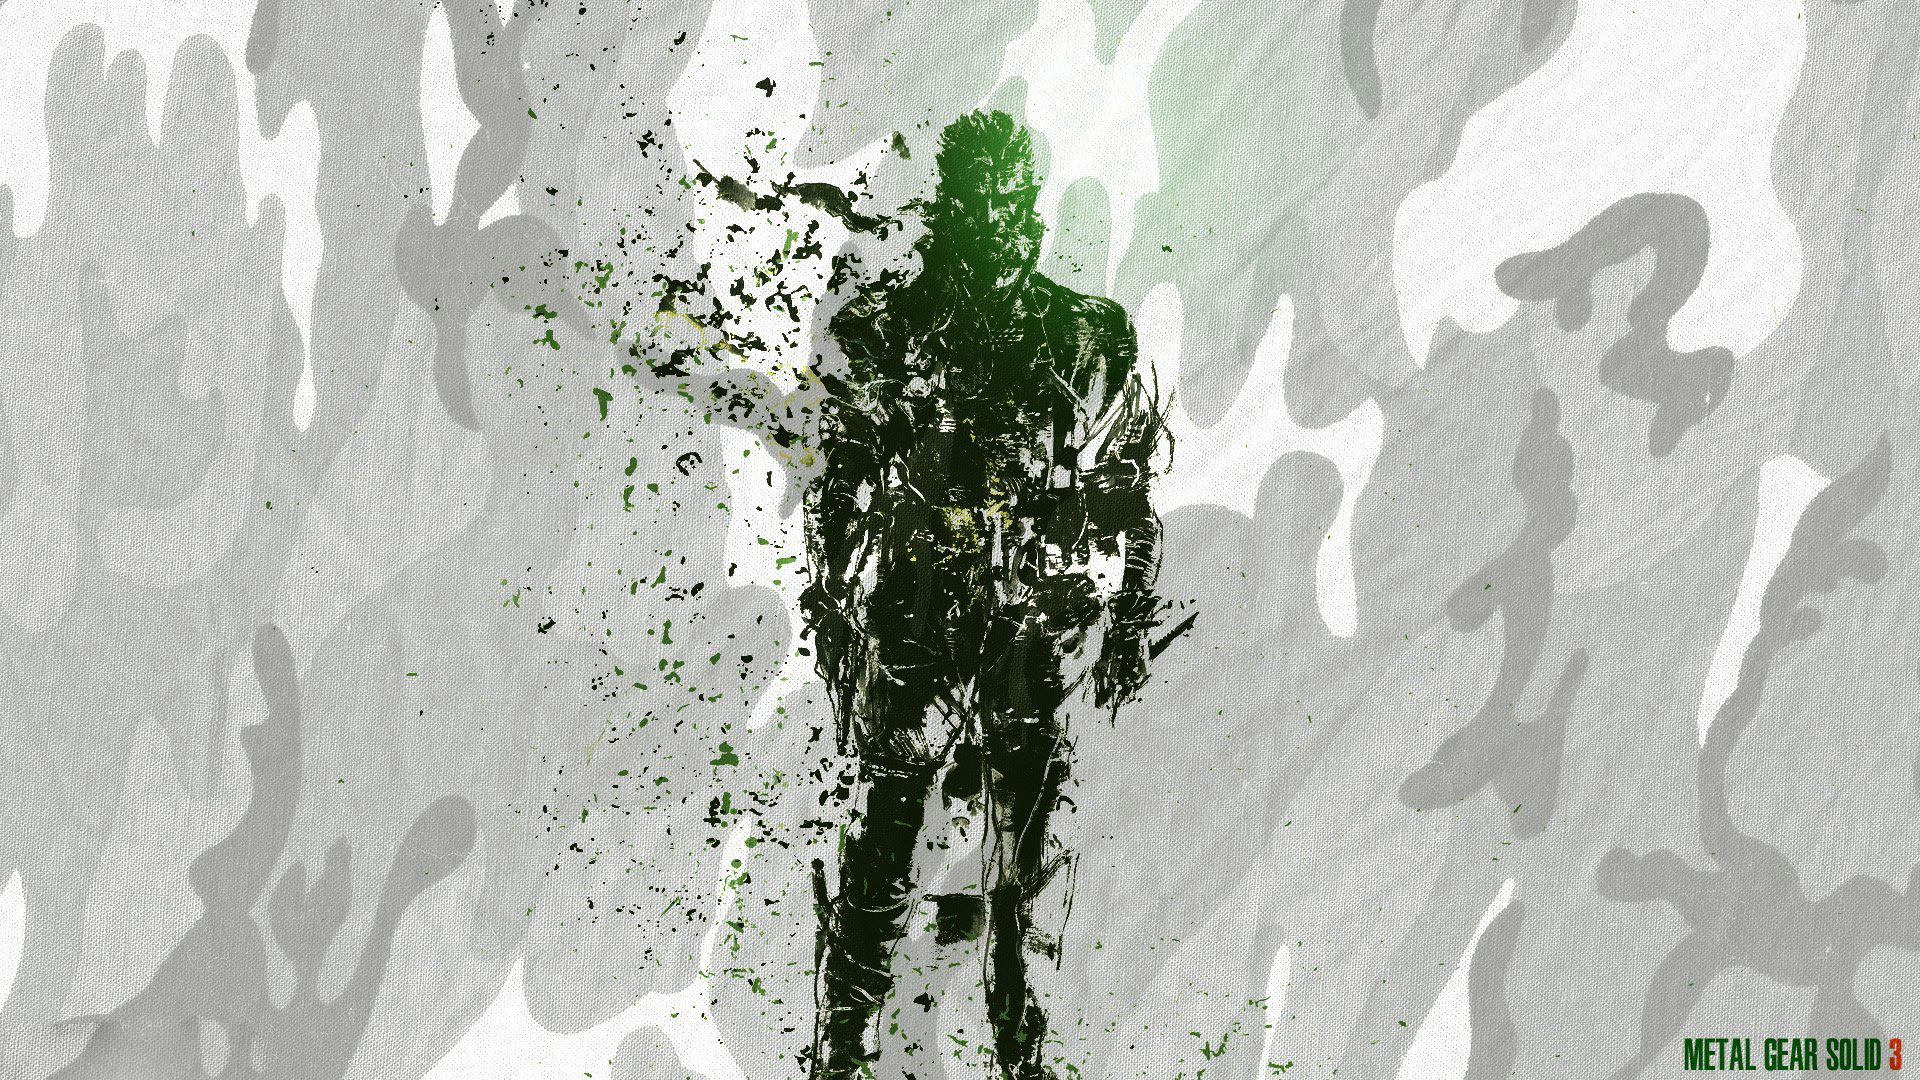 Metal Gear Solid Snake Eater Wallpaper